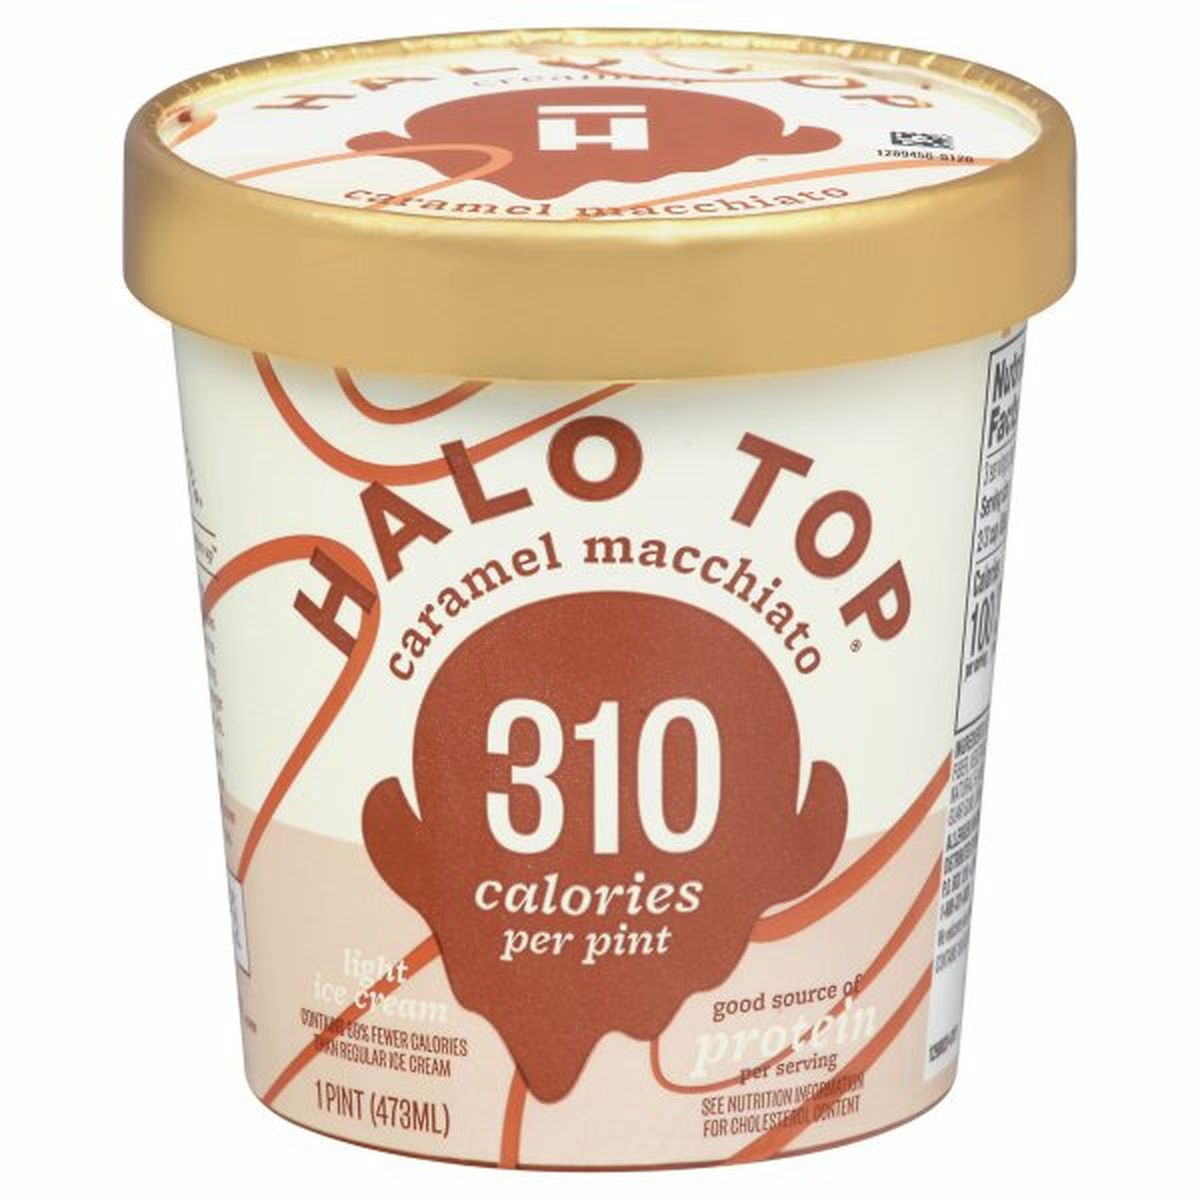 Calories in Halo Top Ice Cream, Light, Caramel Macchiato